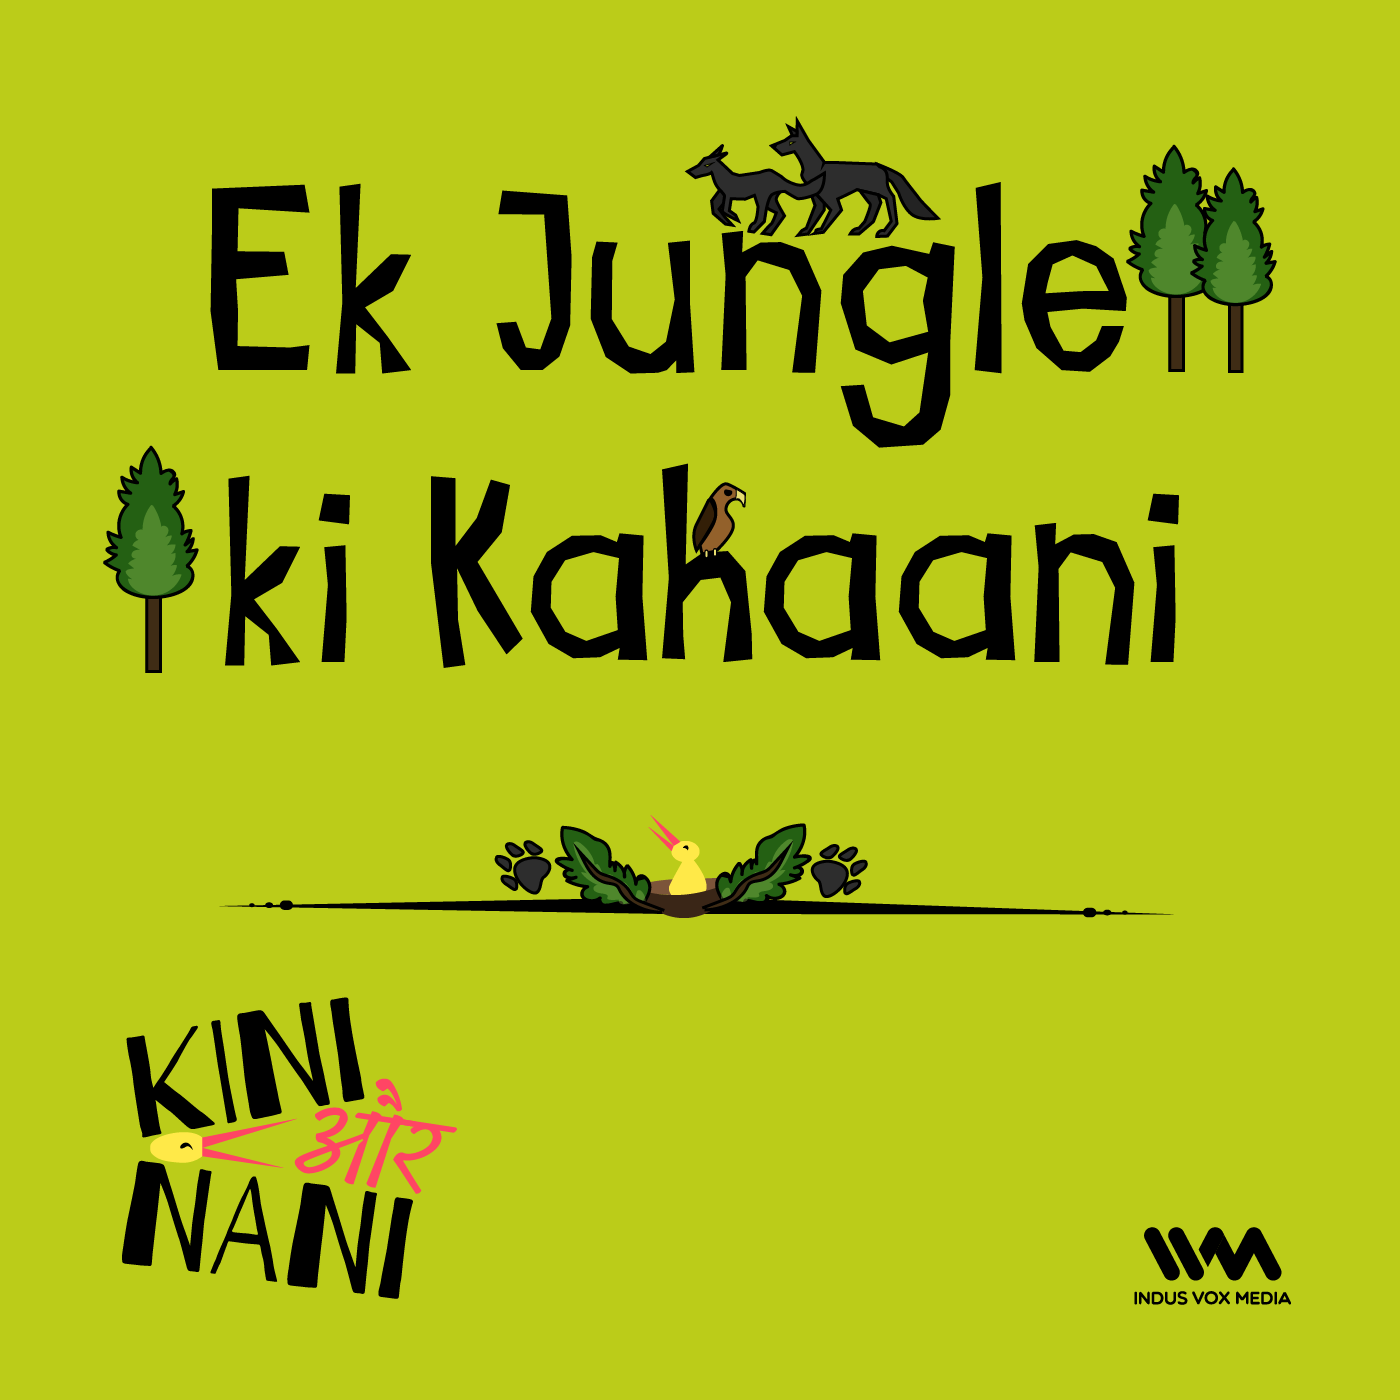 Ek Jungle ki Kahaani